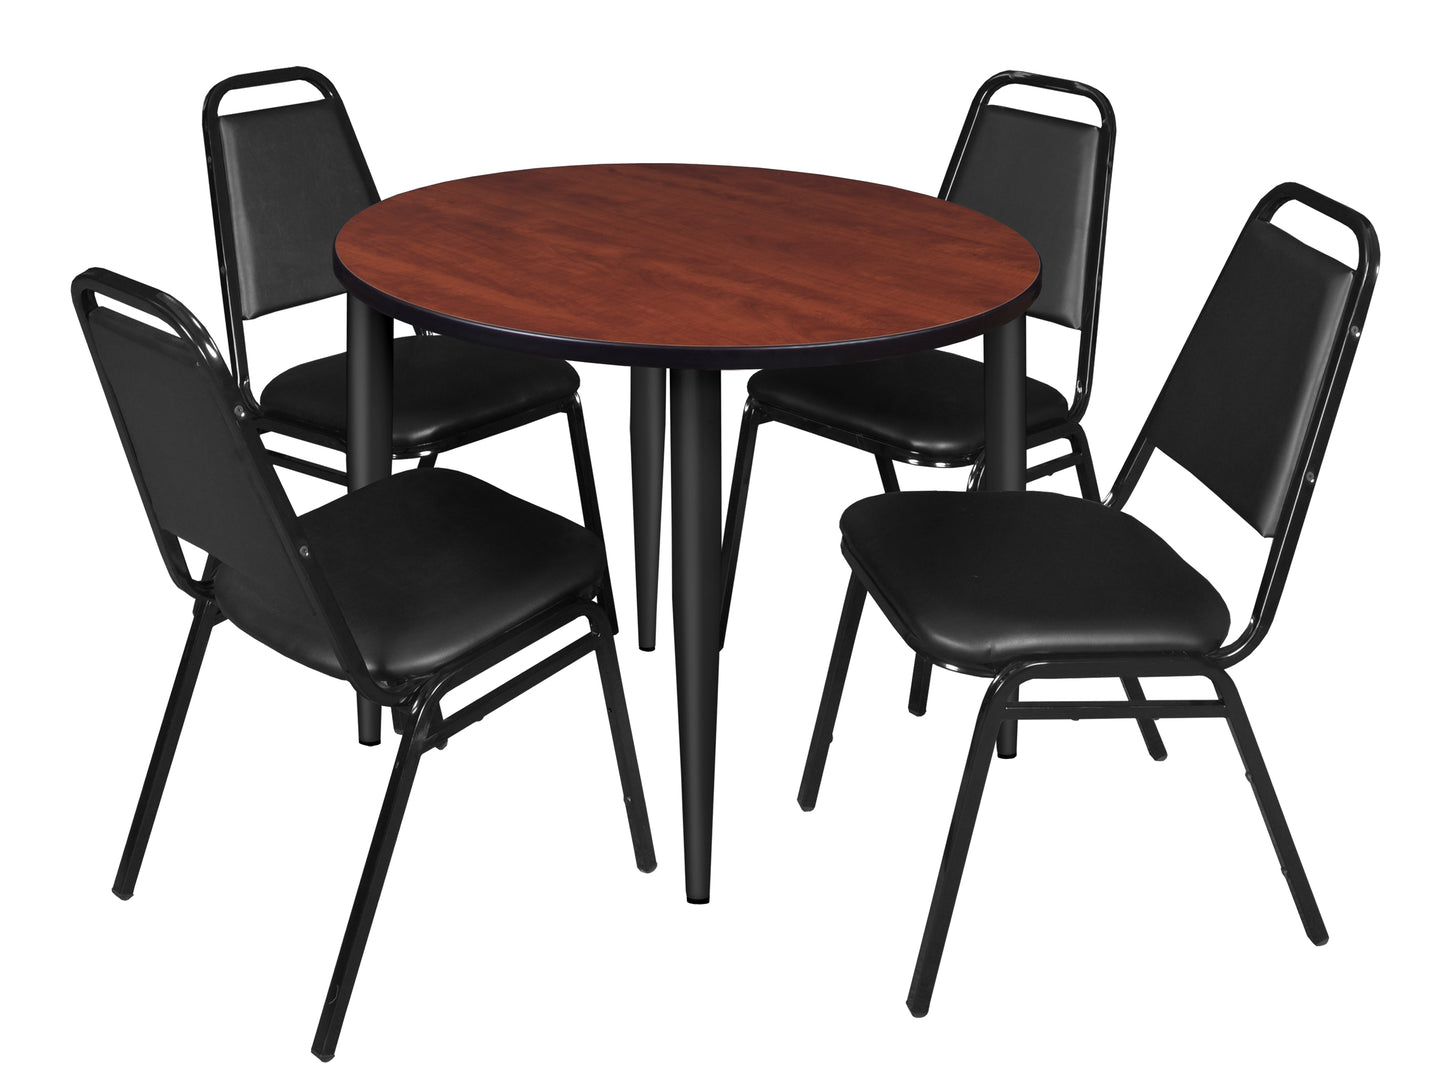 Regency Kahlo 42 in. Round Breakroom Table & 4 Restaurant Stack Chairs - Black